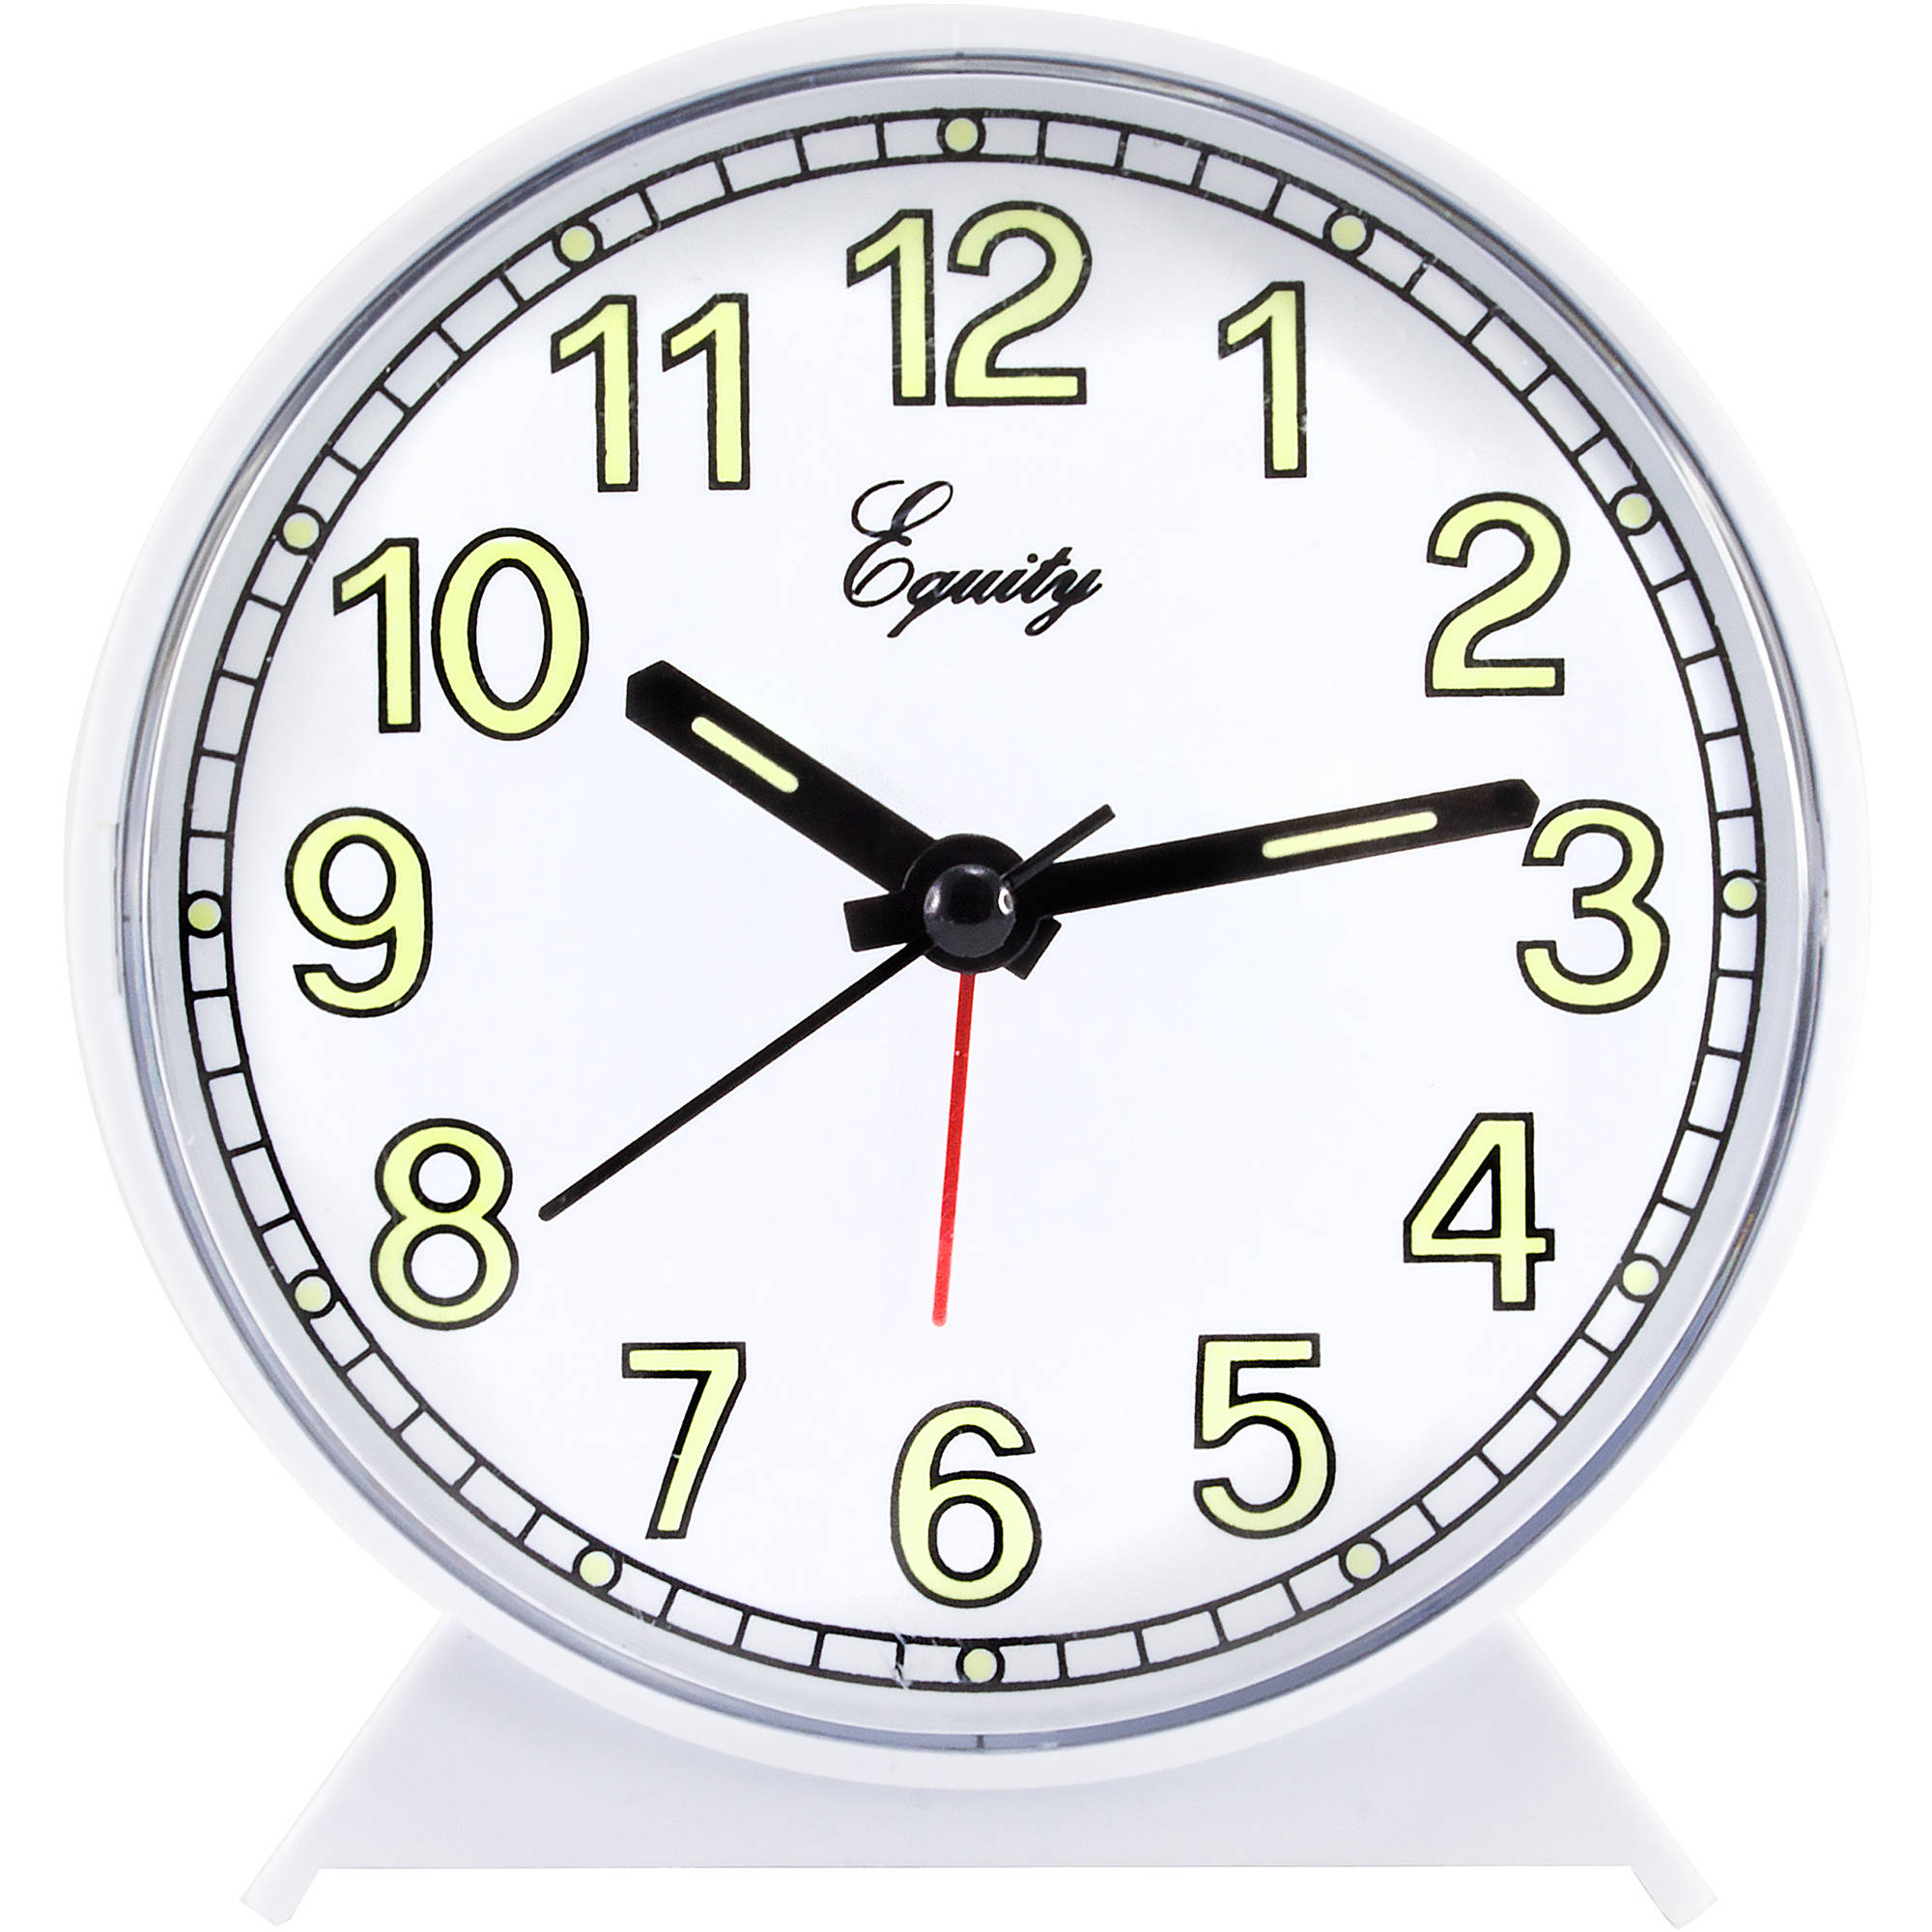 Equity by La Crosse 14076 Analog Quartz Alarm clock, white - Walmart.com